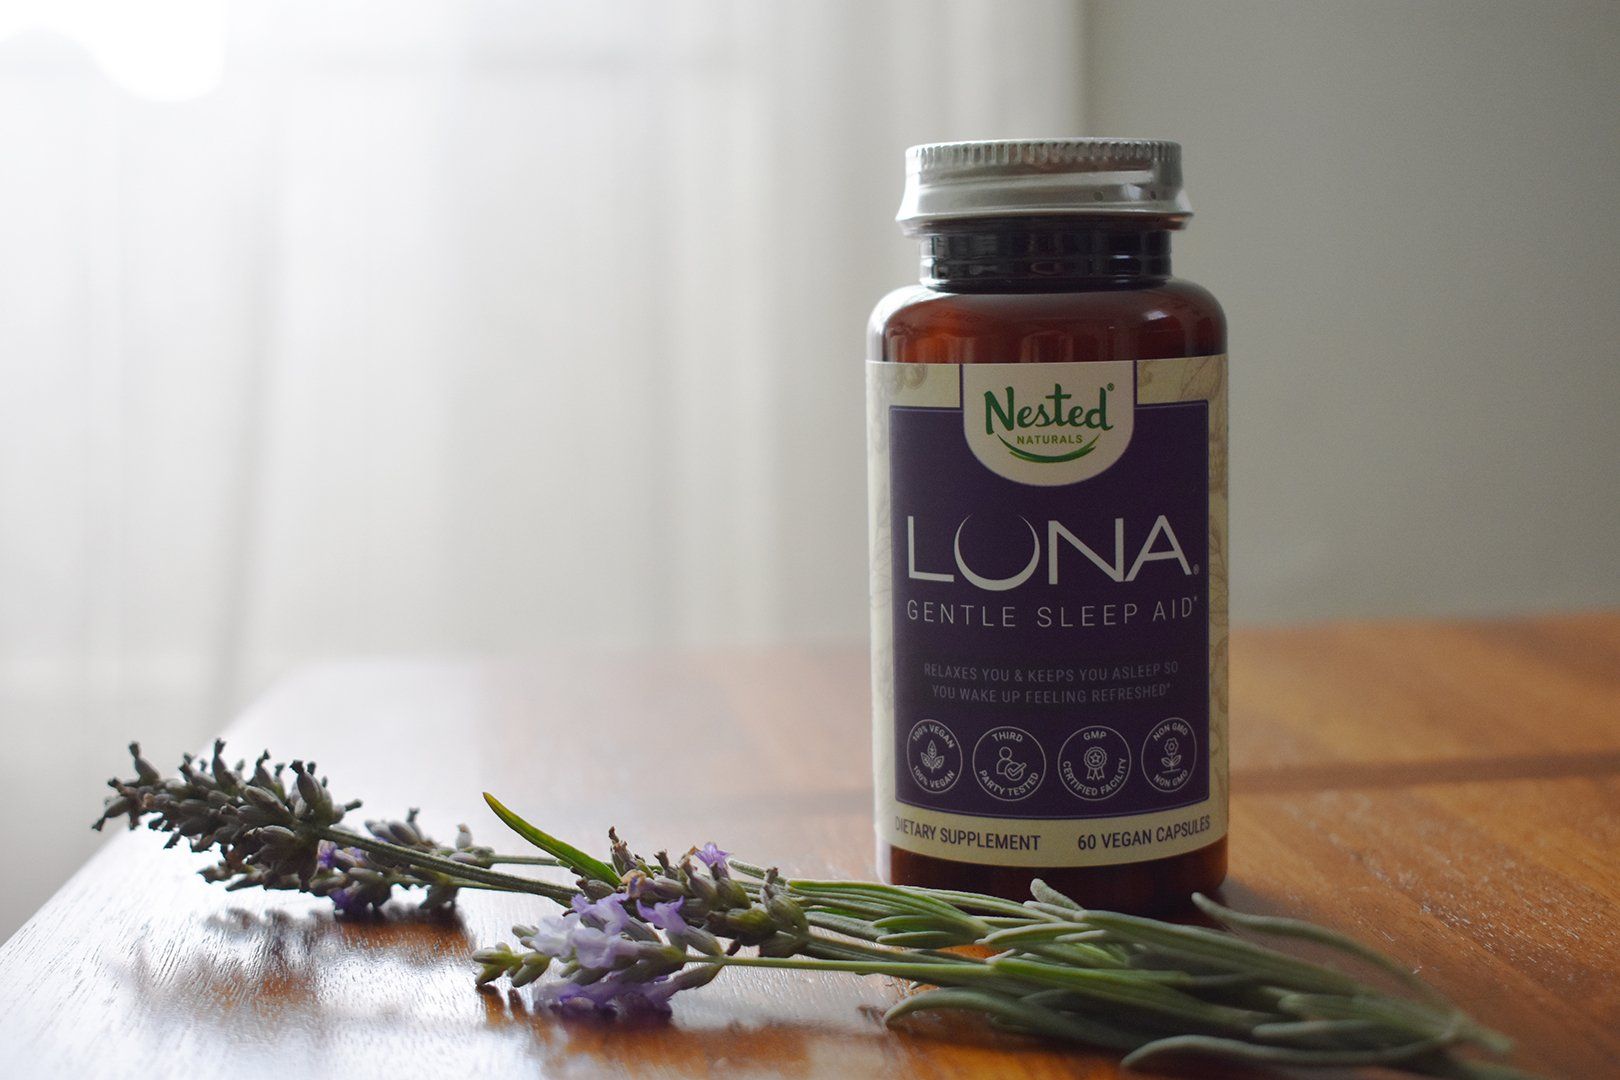 Nested Naturals Luna Supplements with Lavendar